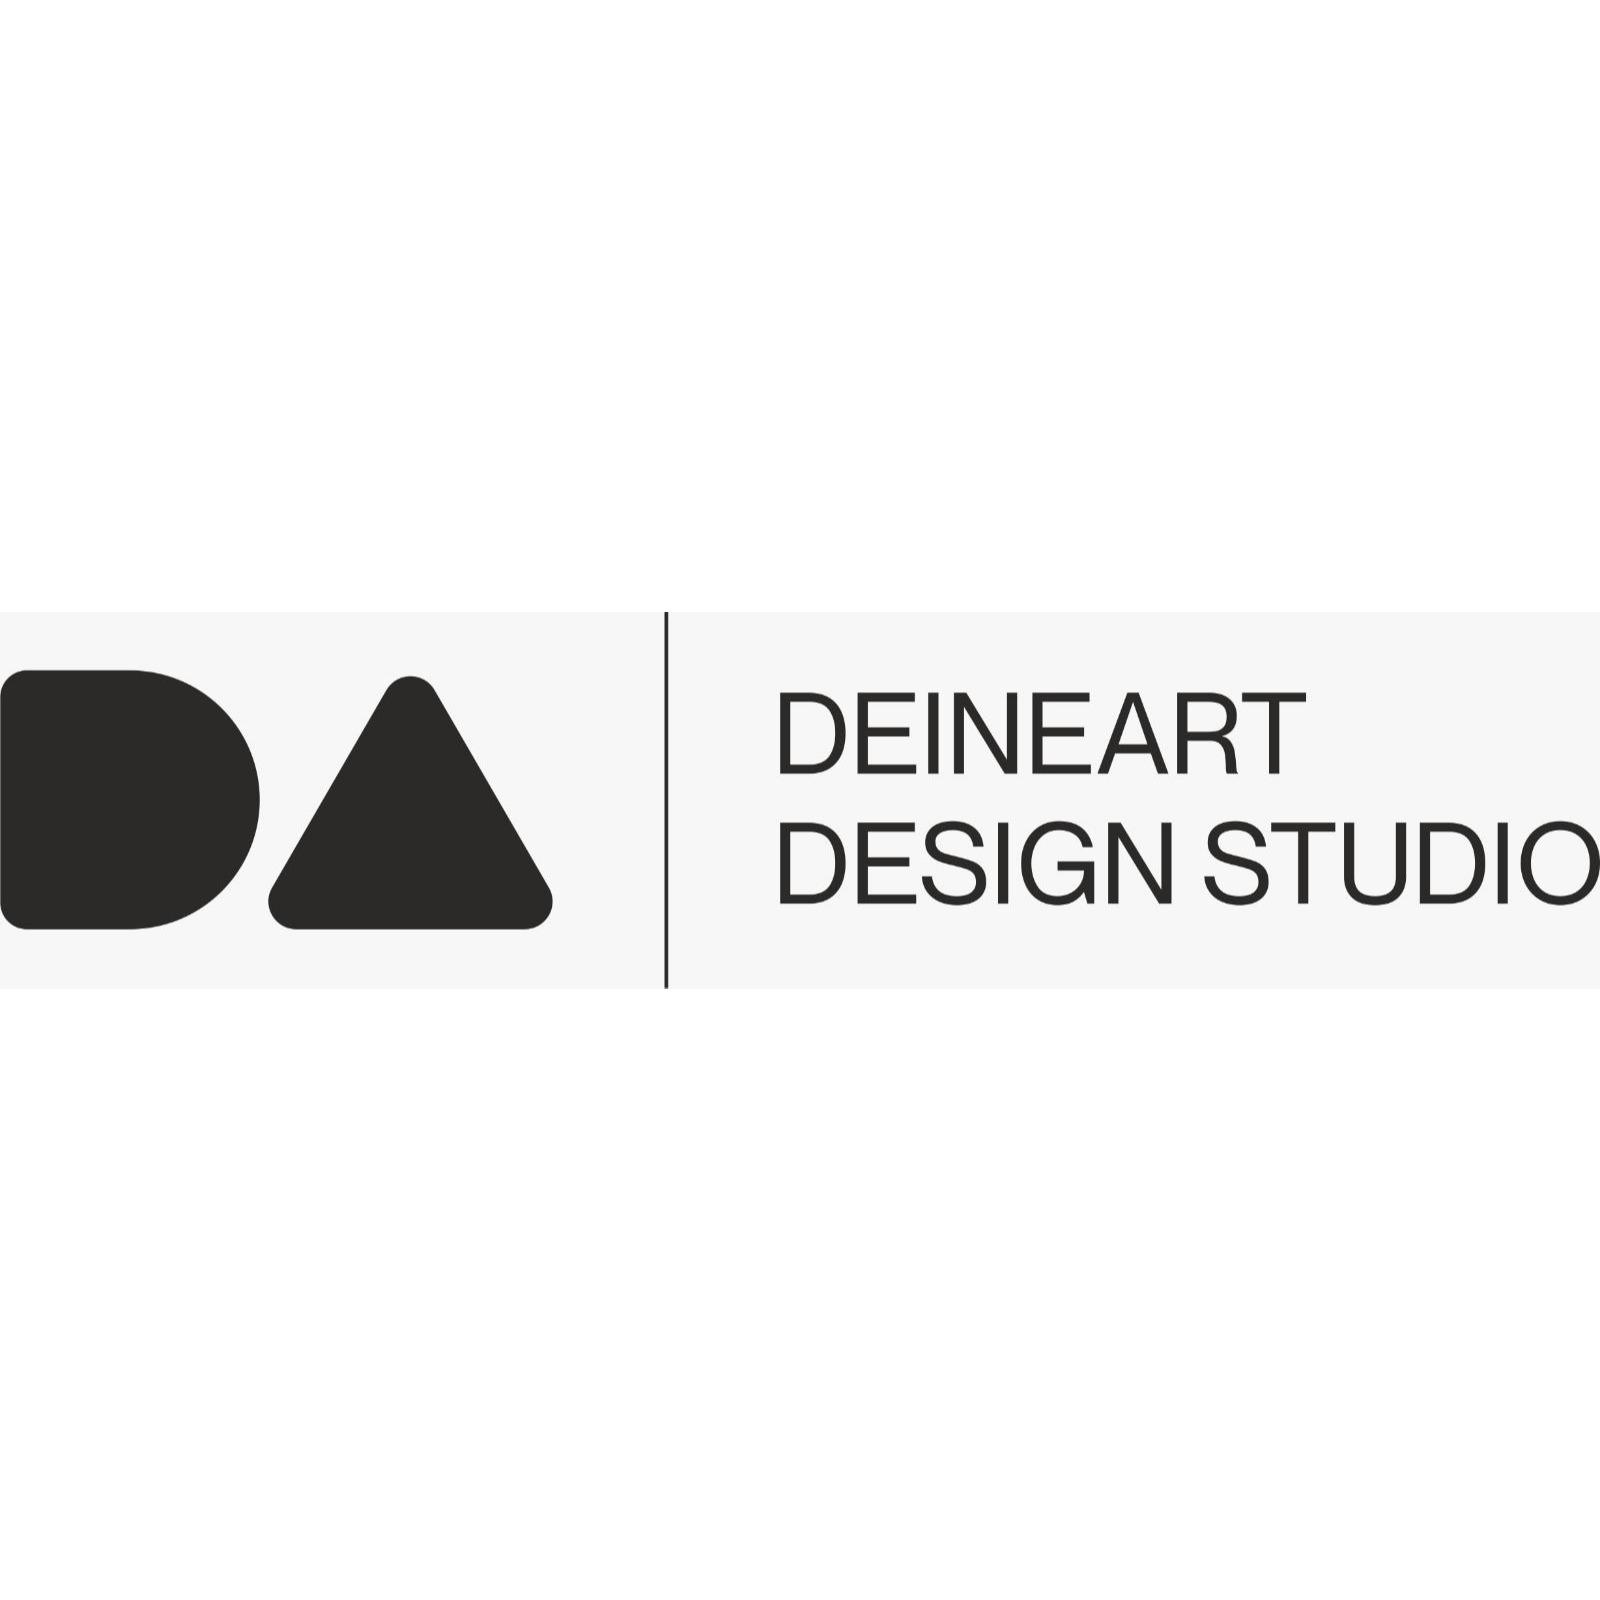 DEINEART Design Studio  